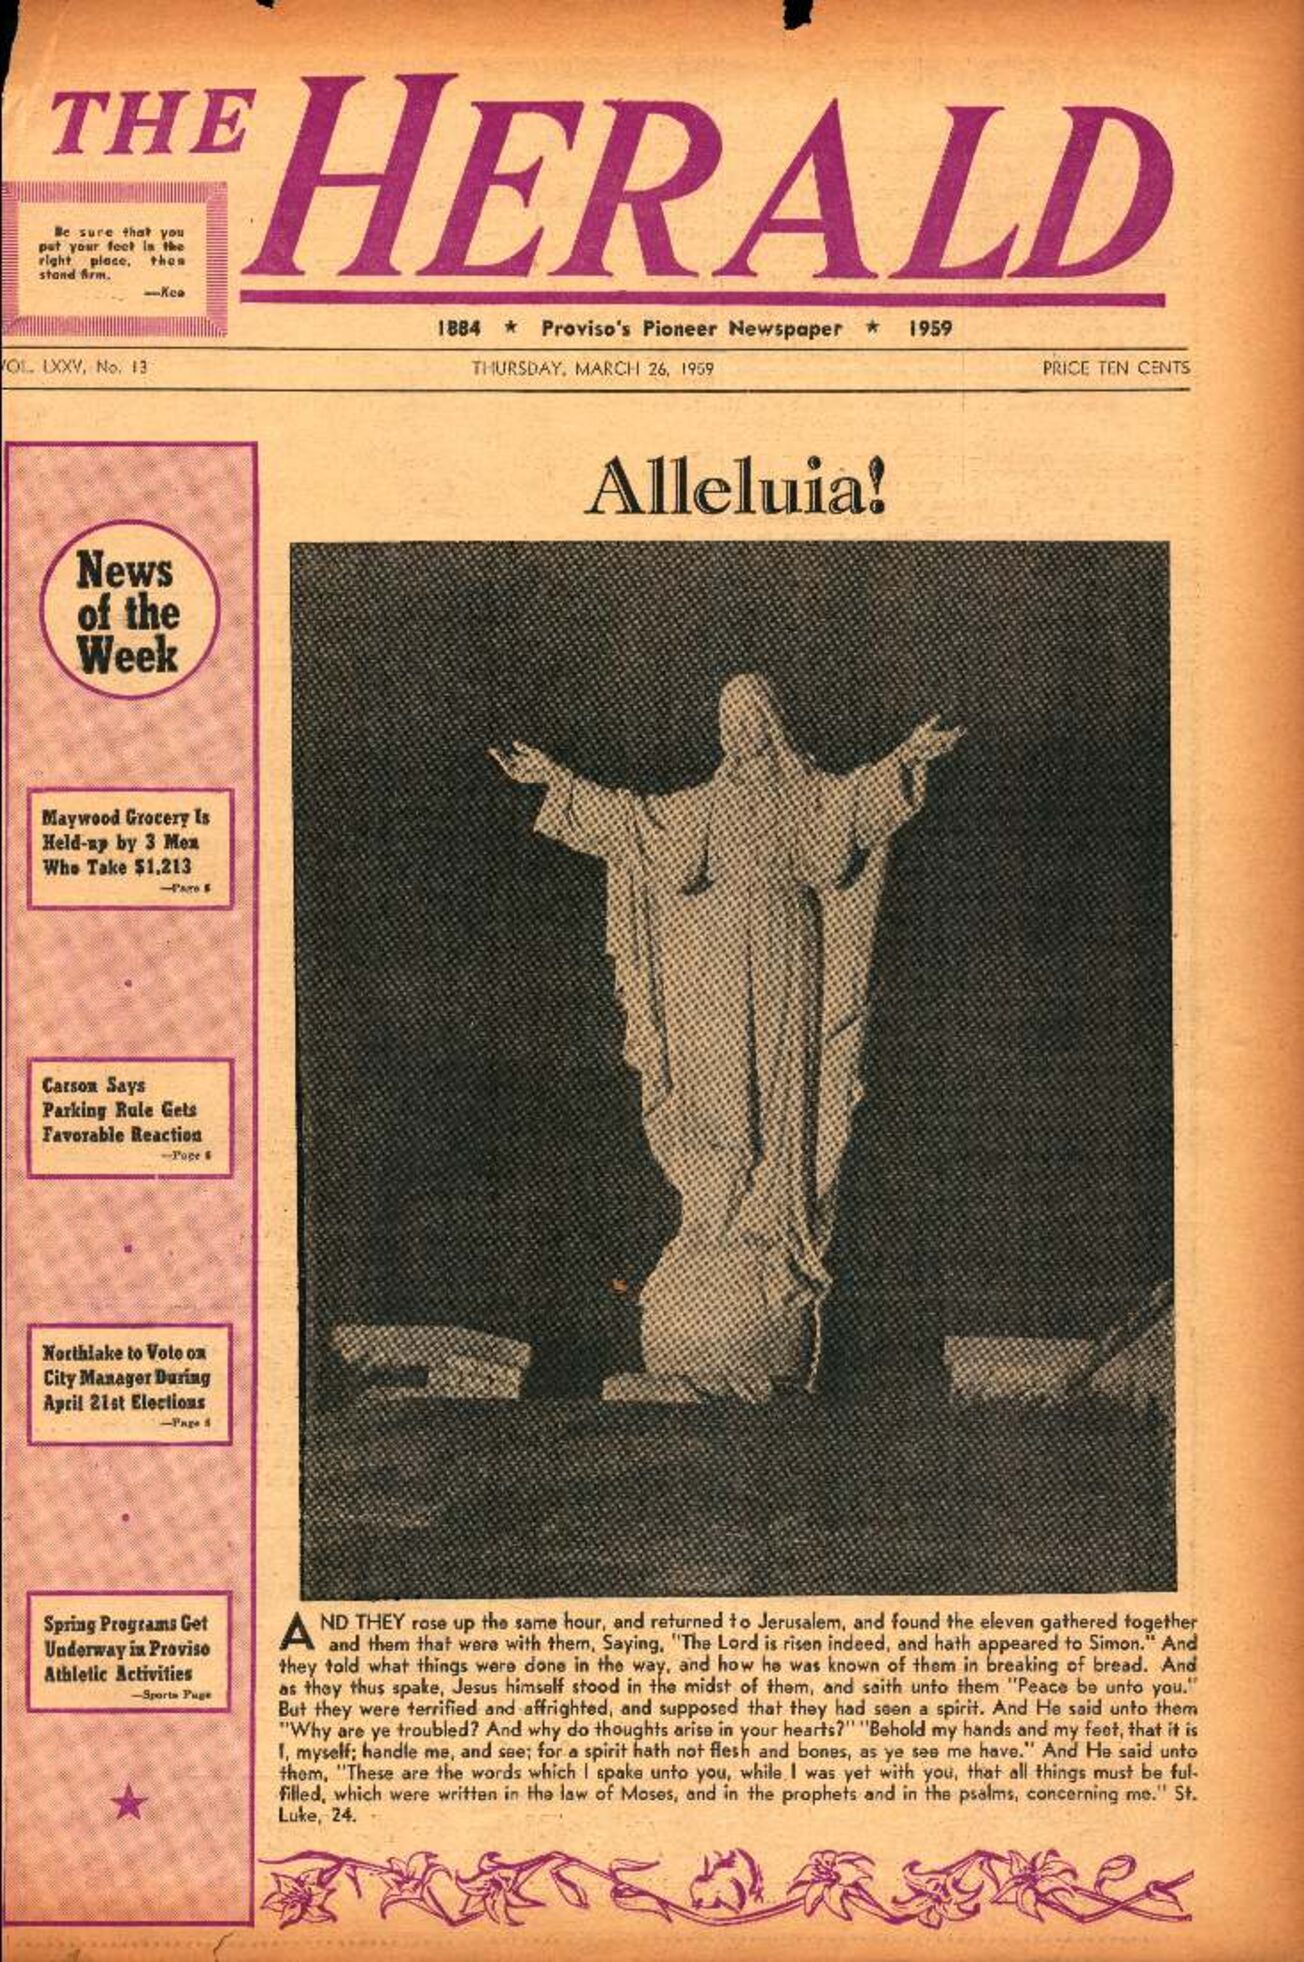 The Herald – 19590326